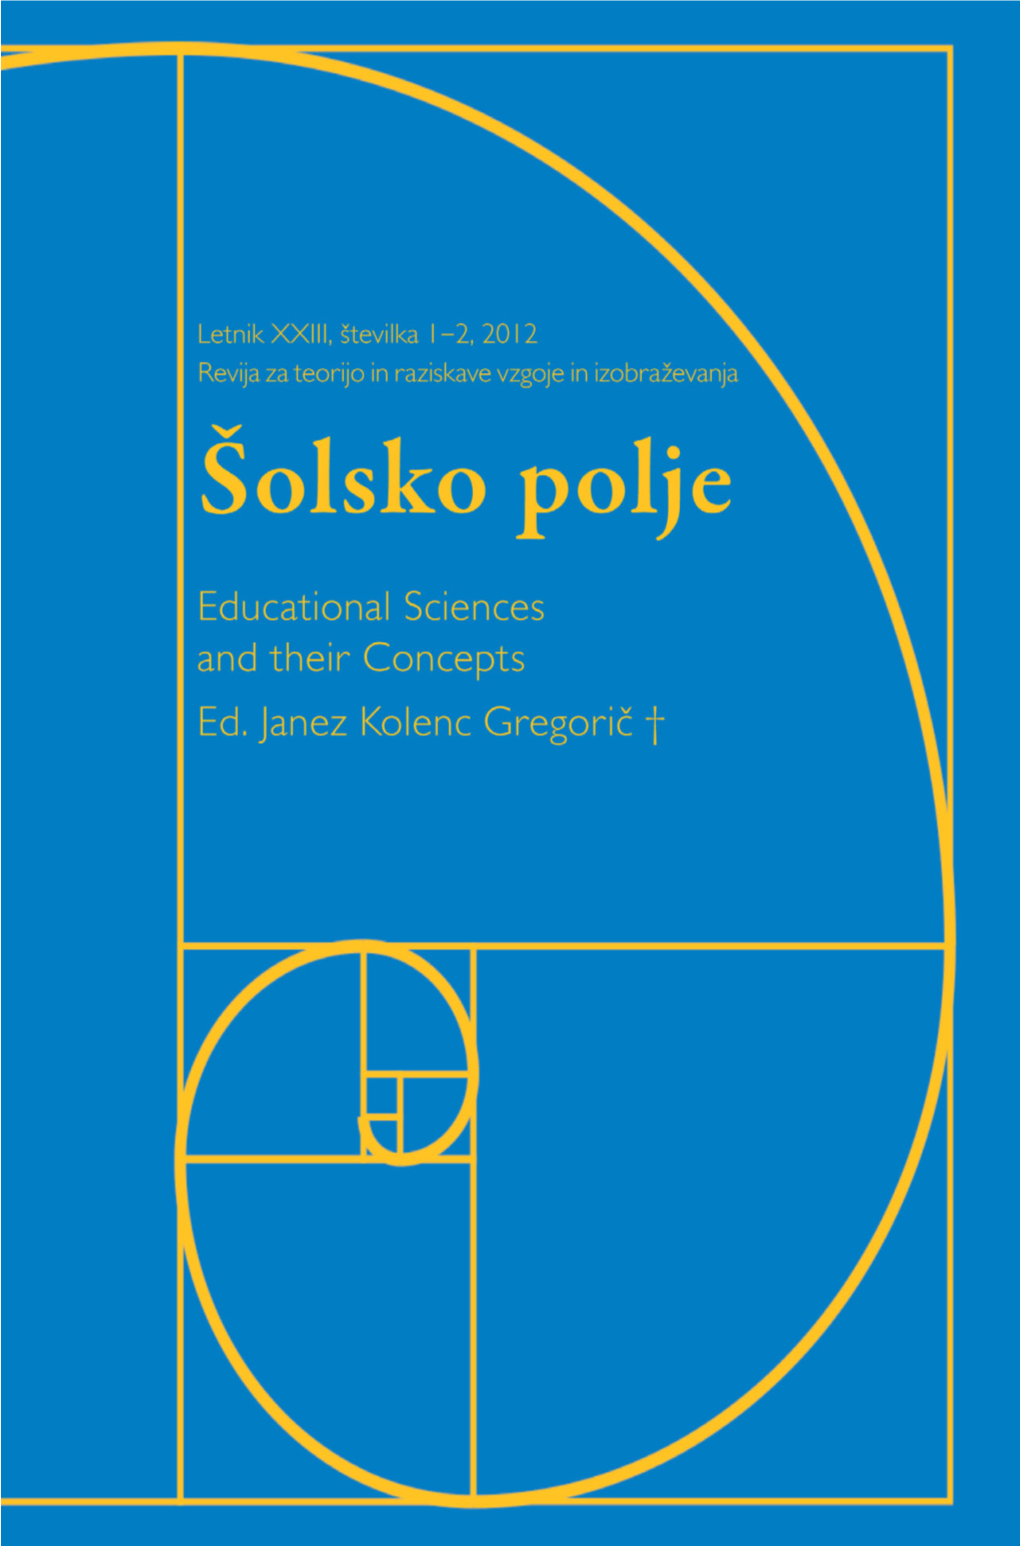 Šolsko Polje, XXIII (2012), Vol. 01-02, Ed. Janez Kolenc Gregorič